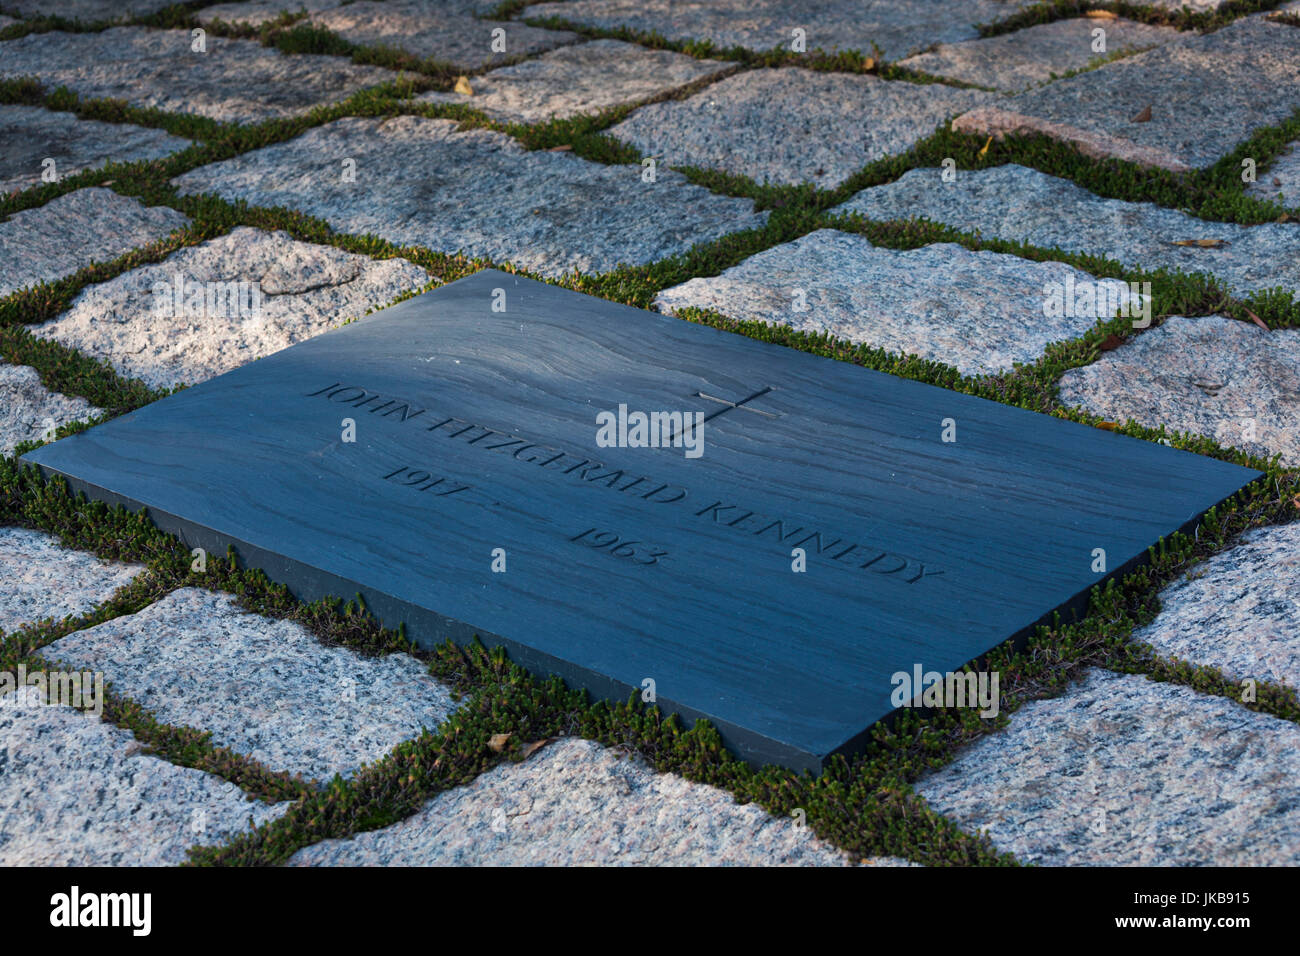 USA, Virginie, Arlington, Arlington National Cemetery, tombe de l'ancien président américain John Fitzgerald Kennedy Banque D'Images